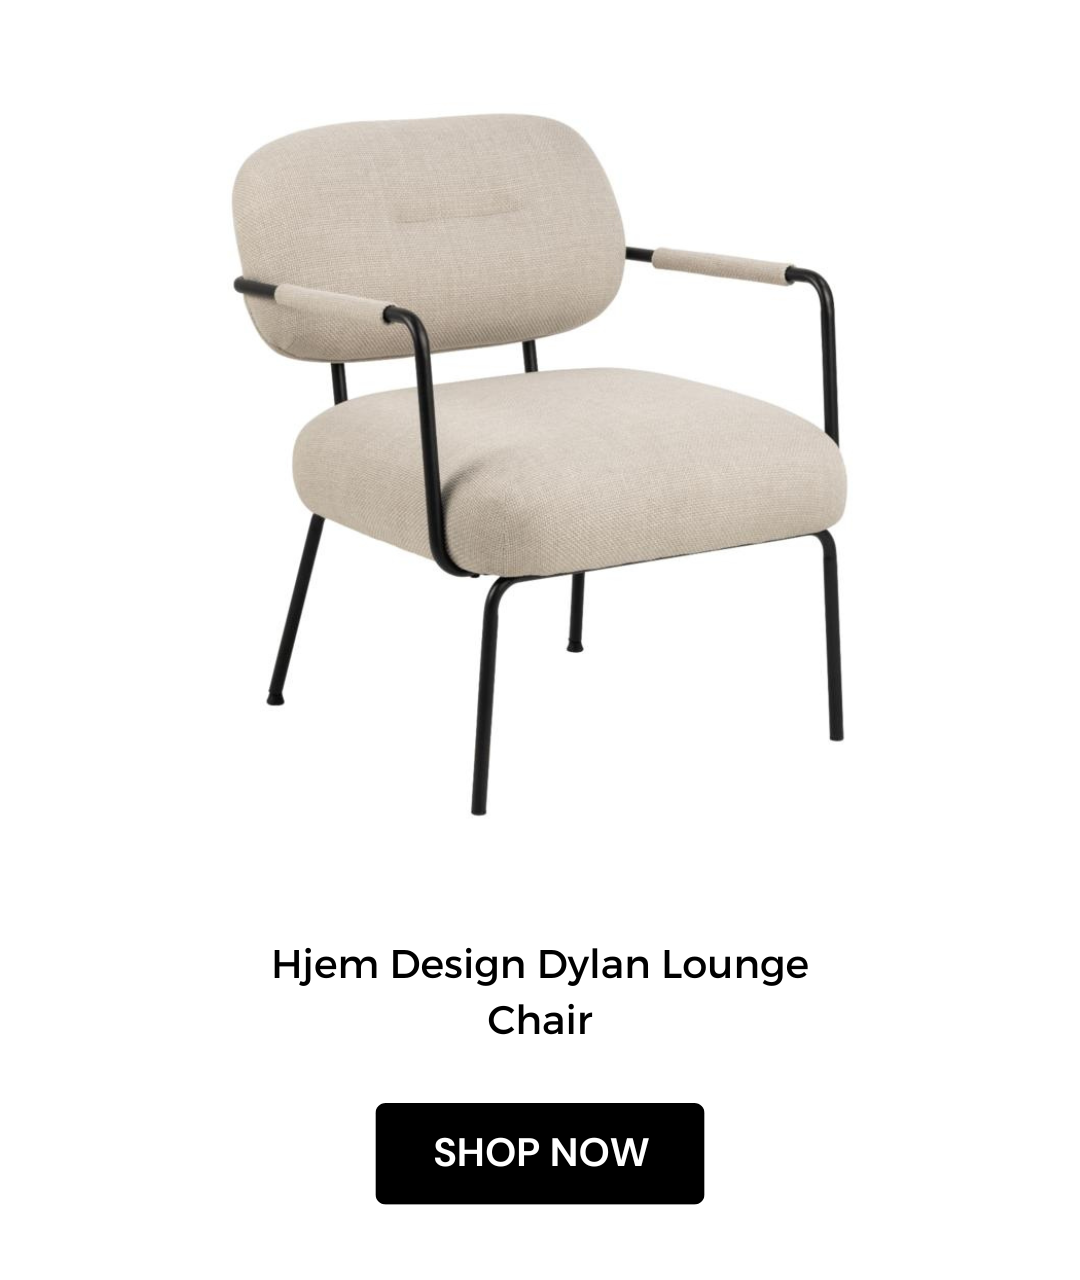 Hjem Design Dylan Lounge Chair